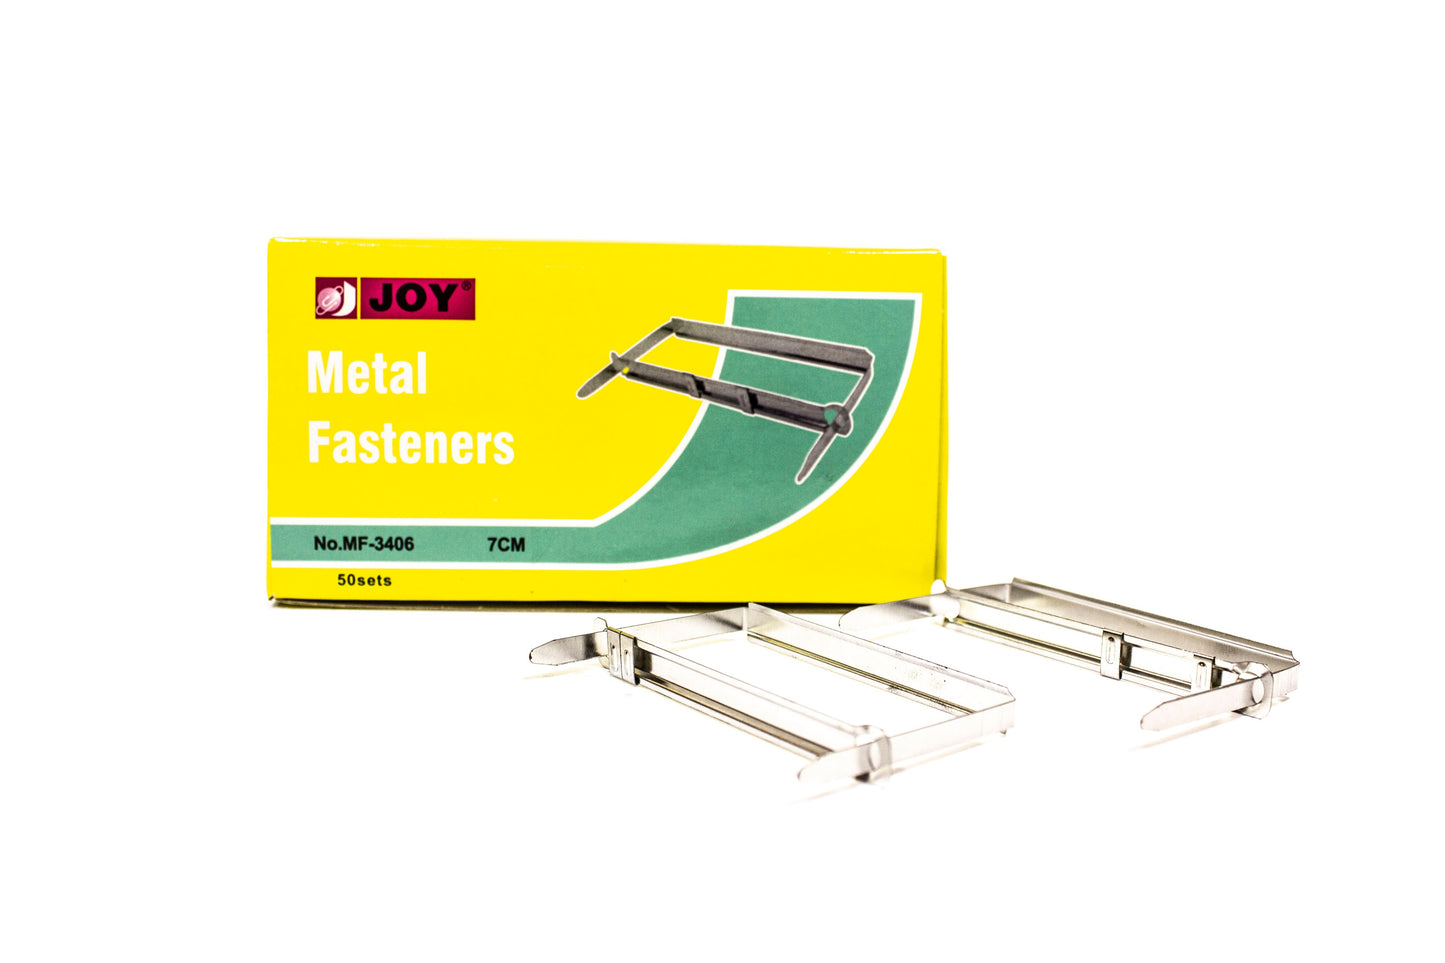 Joy Paper Fastener Metal 7cm | 10Box